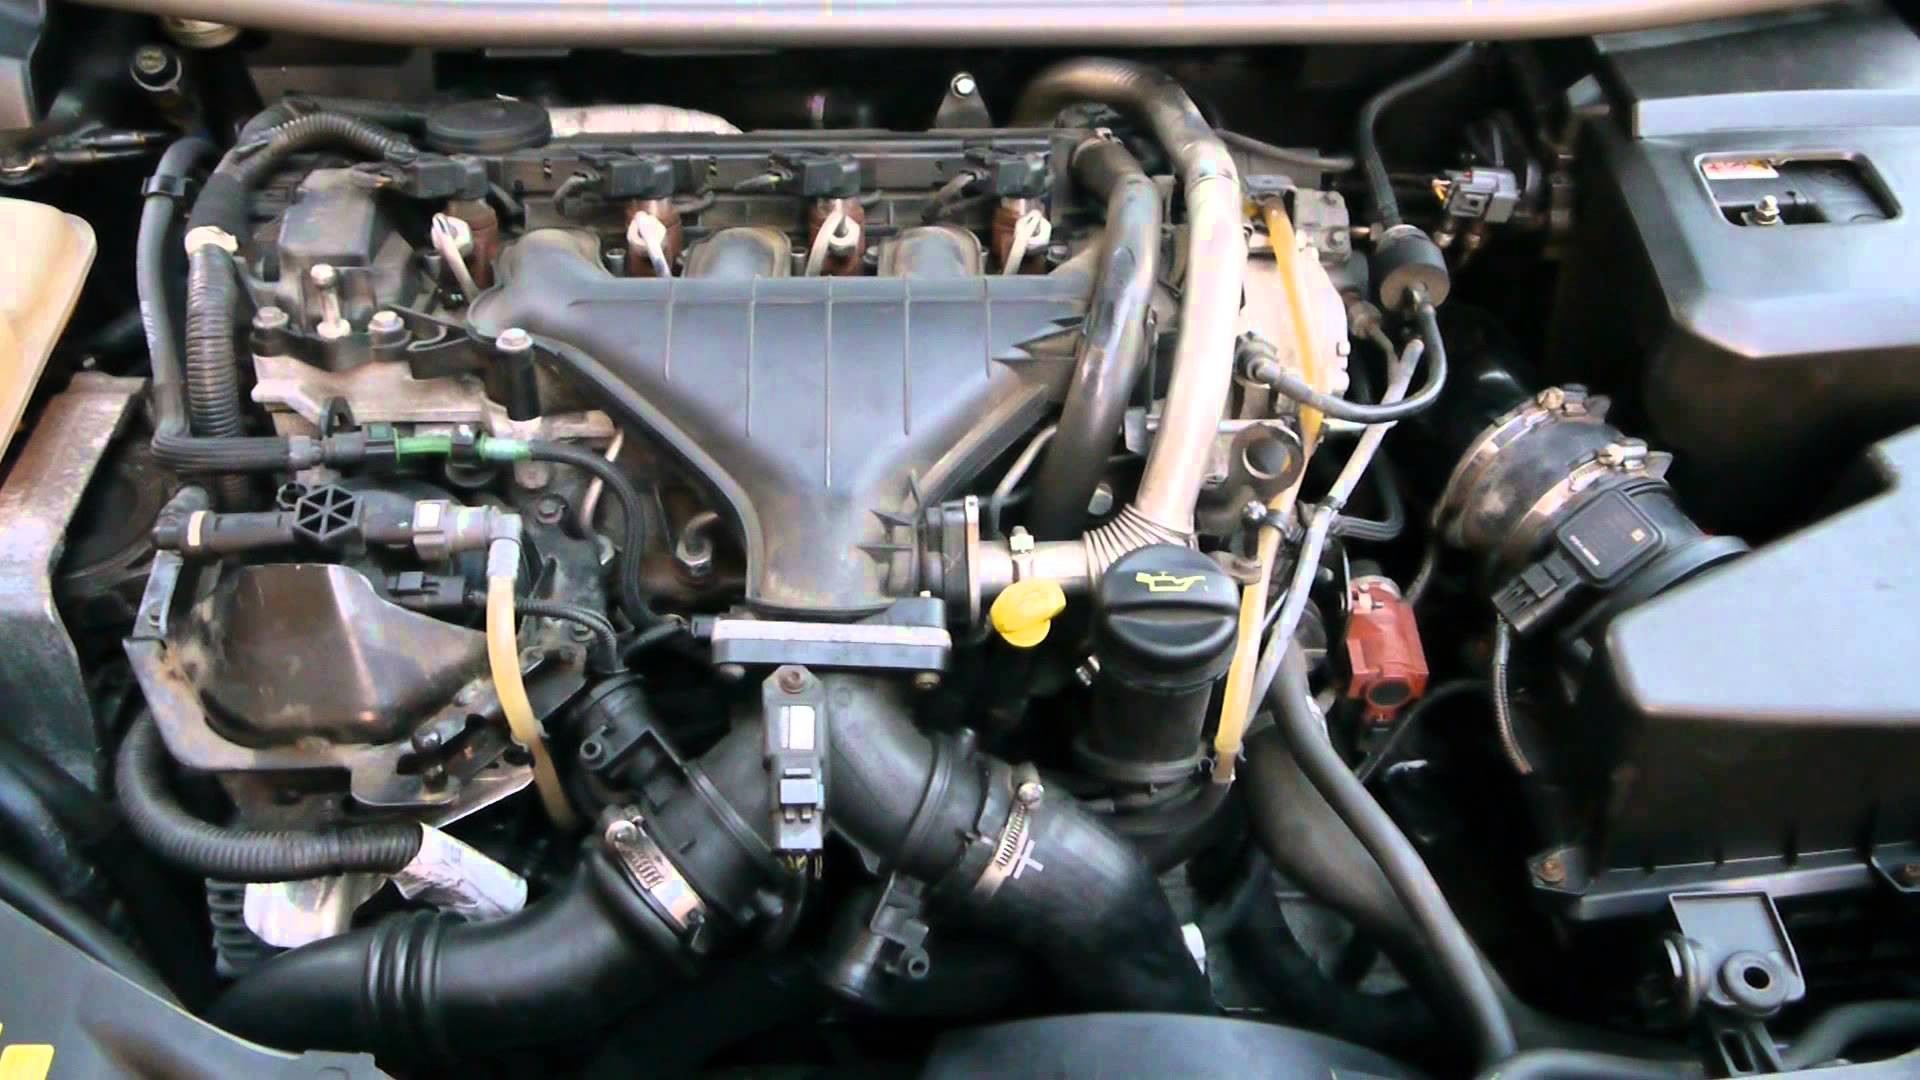 Volvo S40 Engine Diagram Problems with Volvo V50 Engine False Start but Runs Ok 14 11 2012